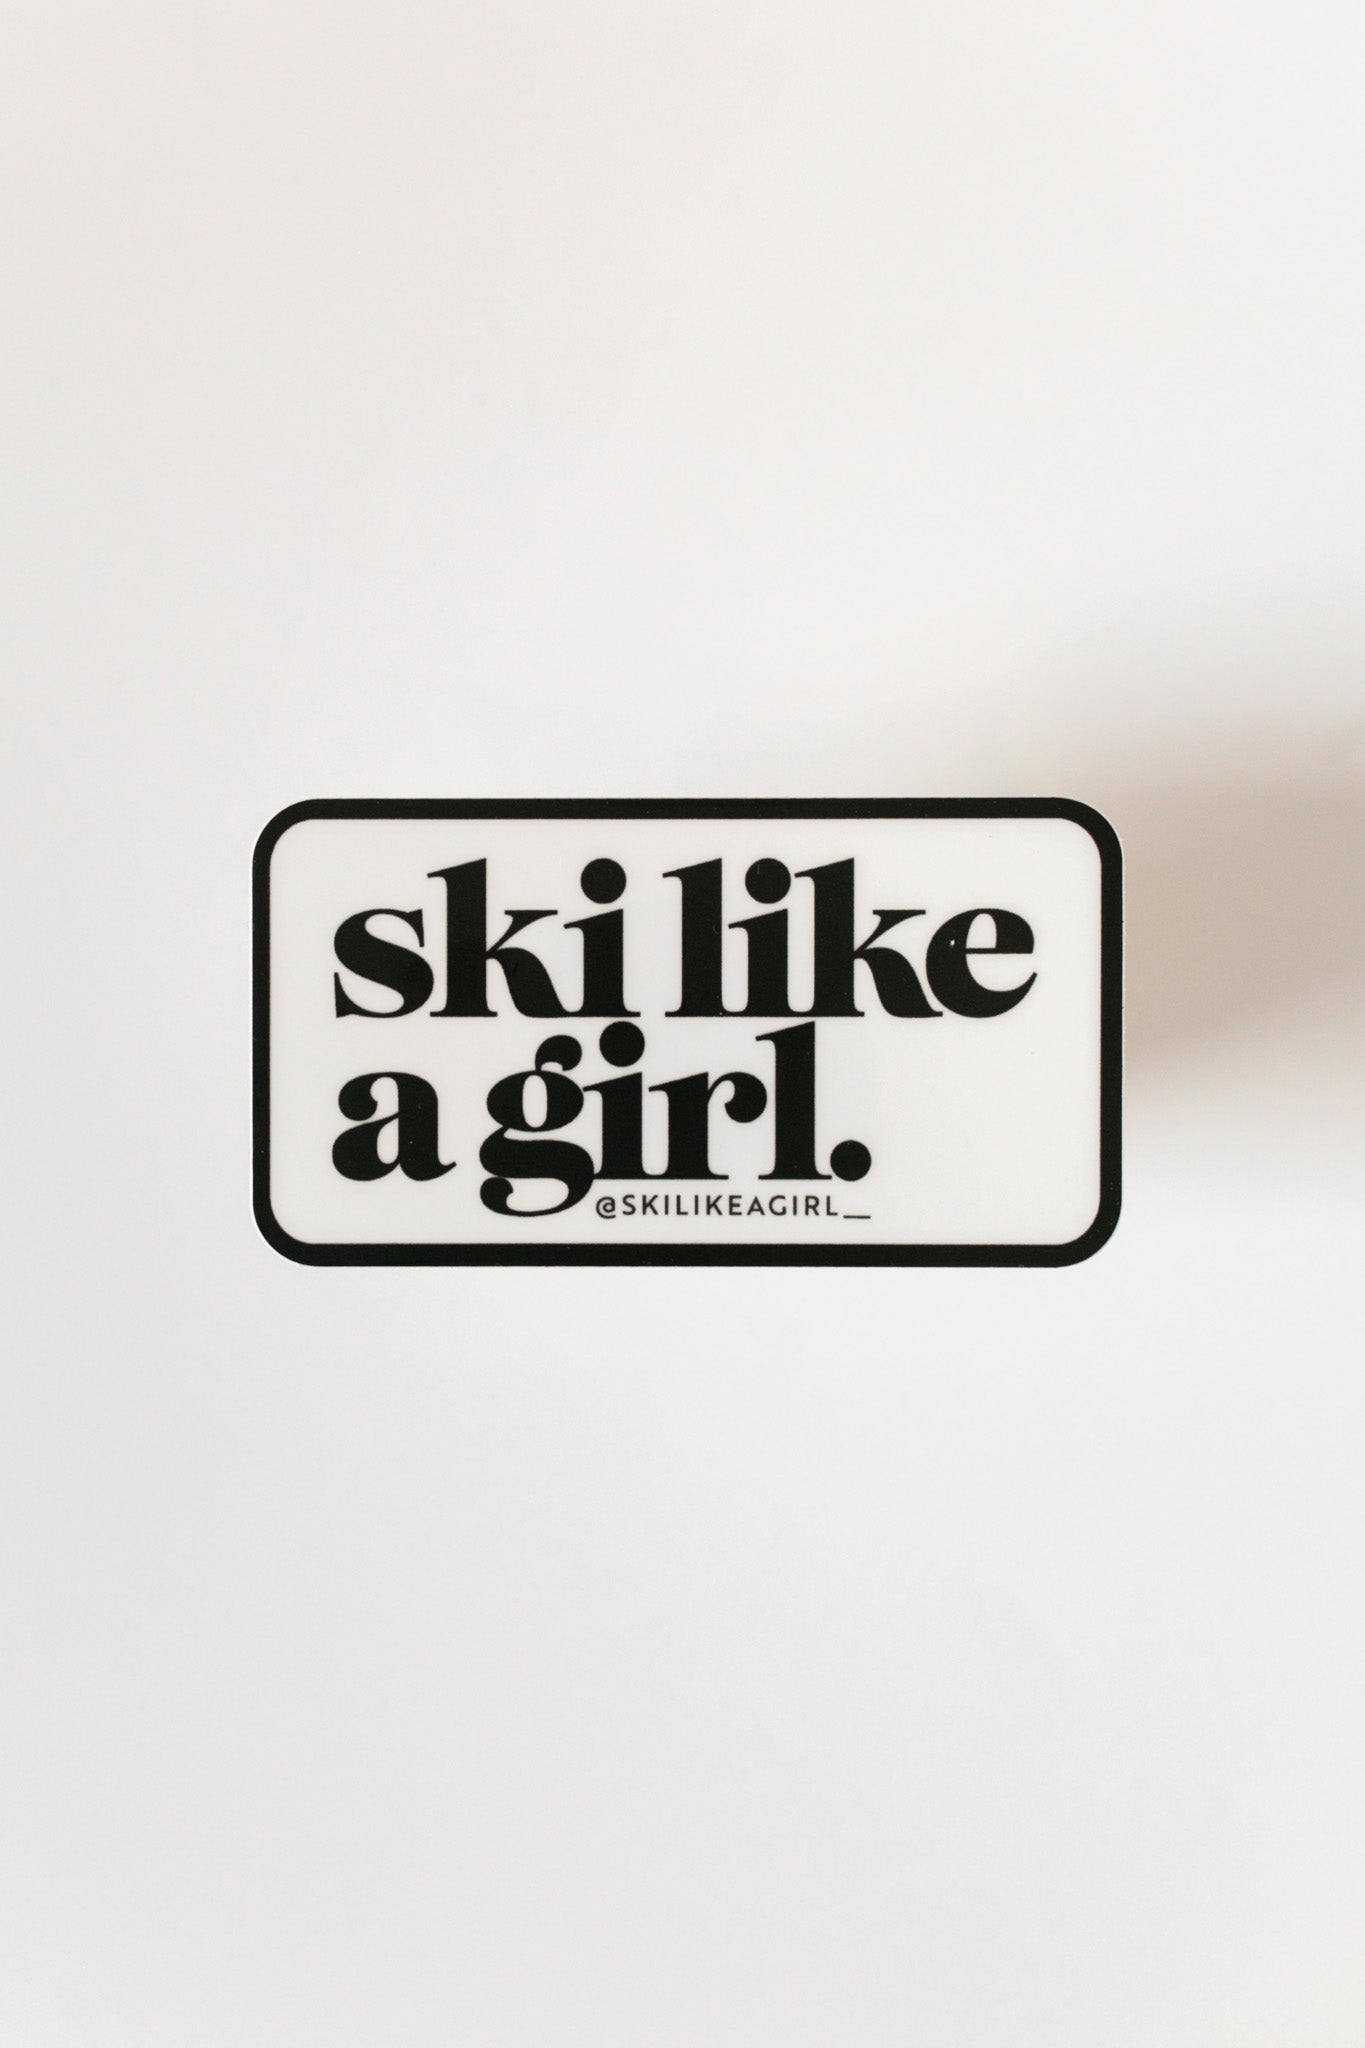 Ski Like a Girl Patch Sticker